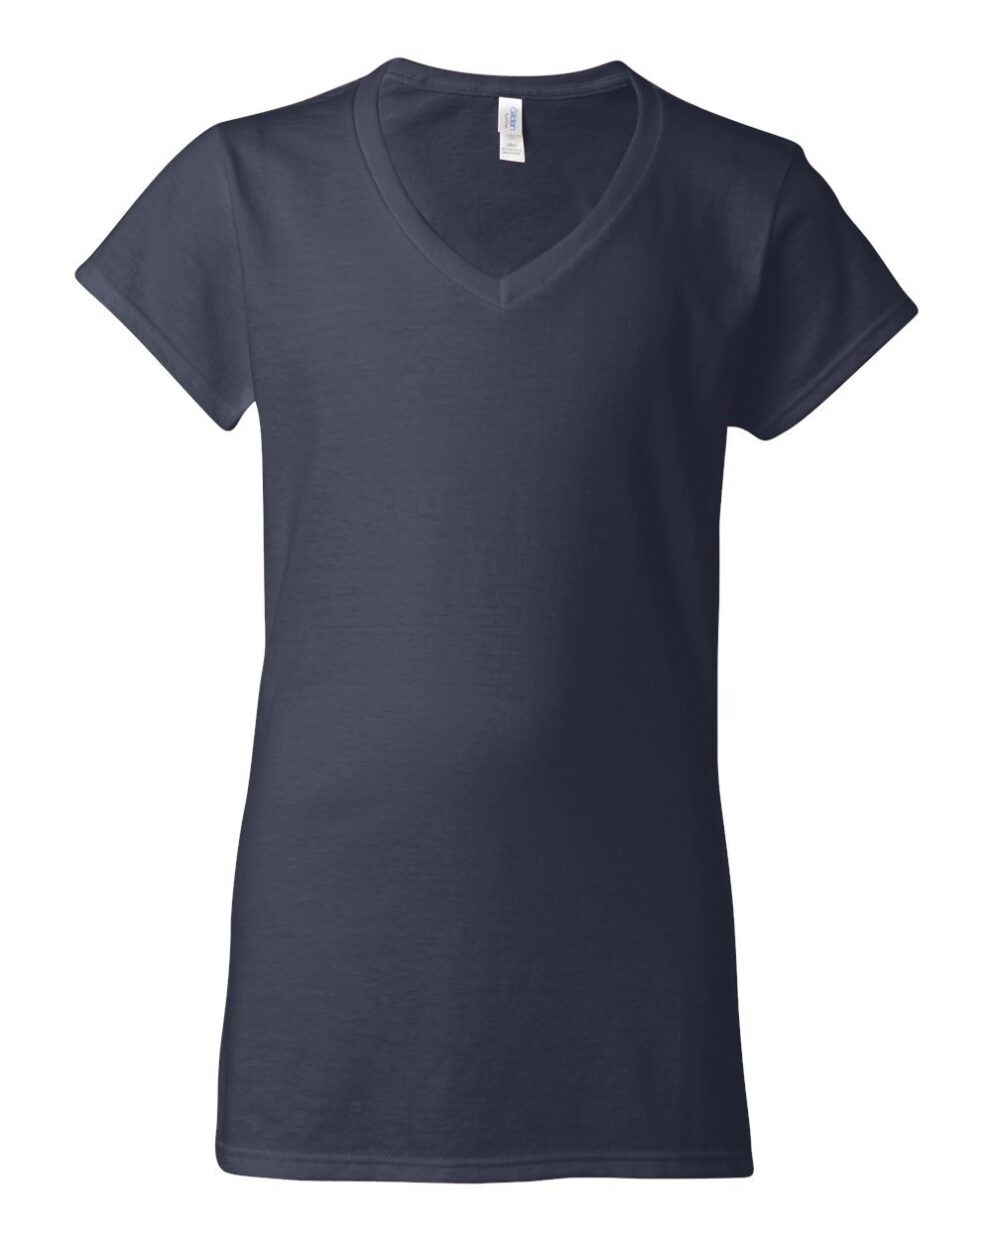 Ladies V-neck Navy Cotton T-shirt